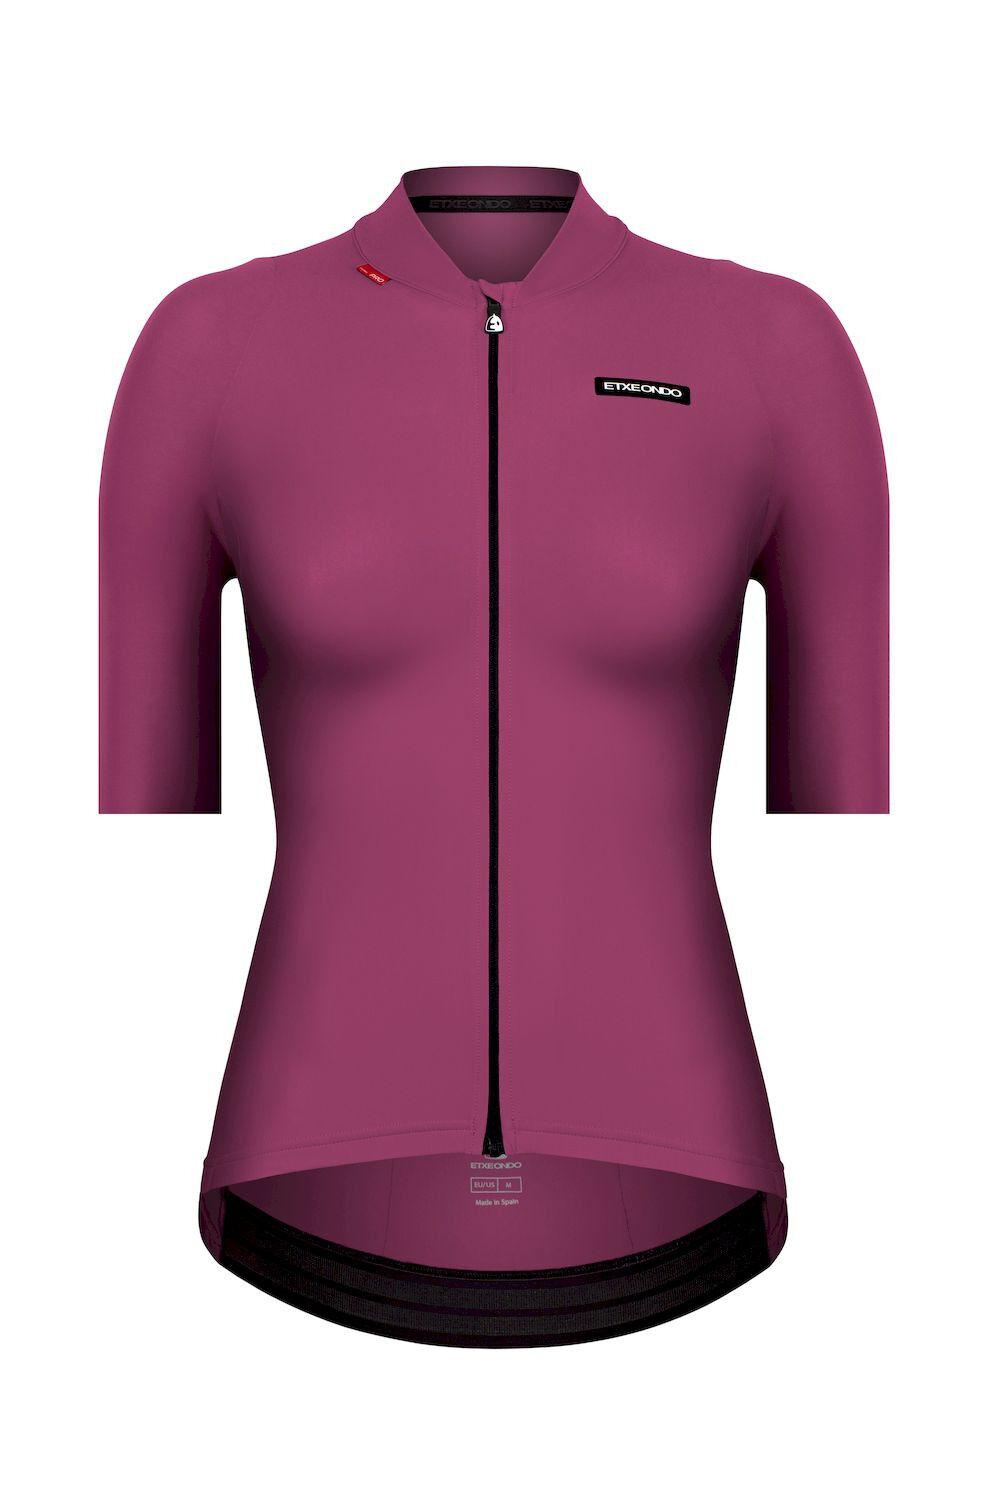 Etxeondo Alda - Cycling jersey - Women's